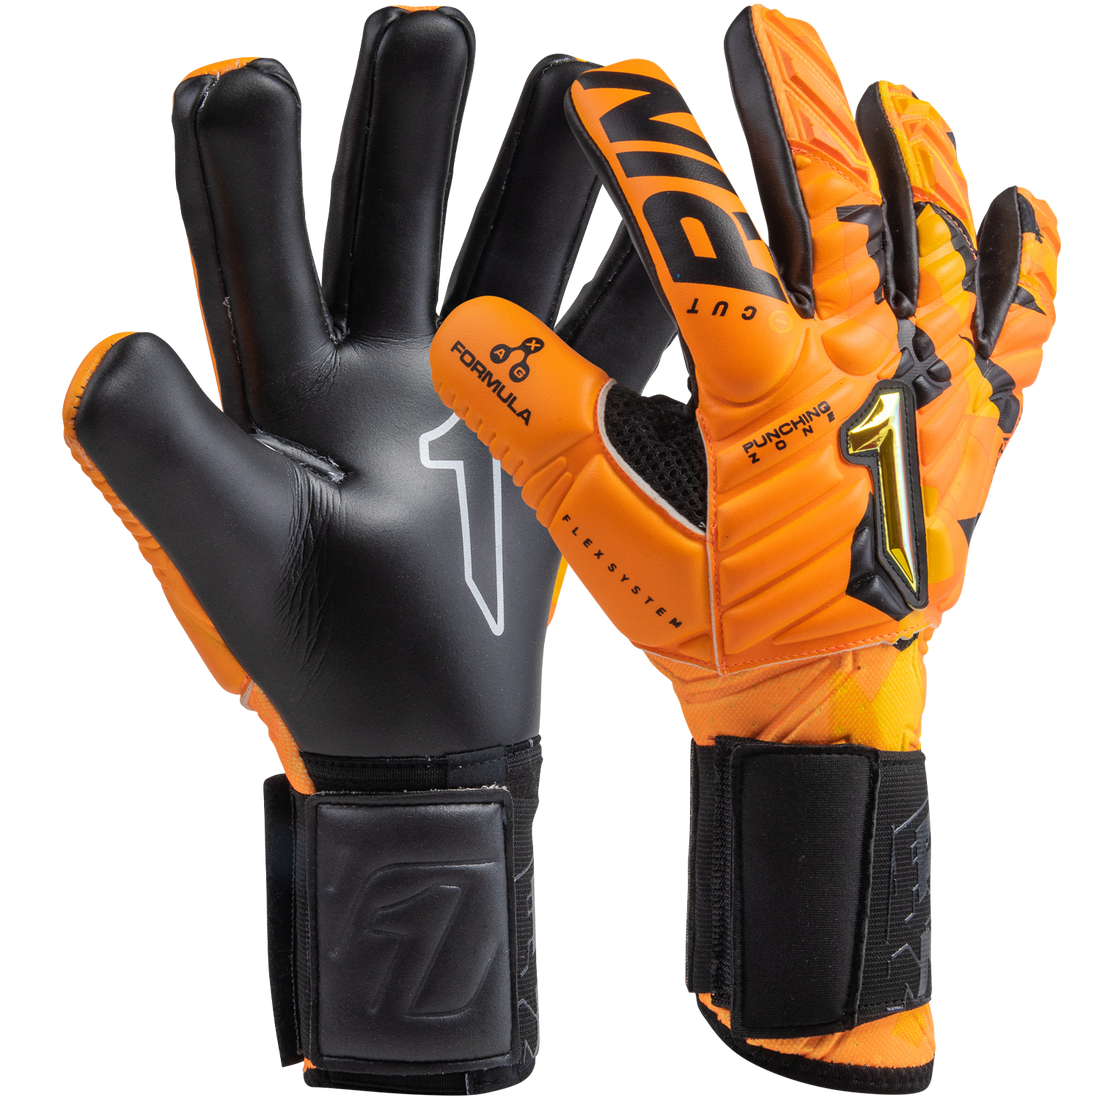 Rinat Meta Tactik PRO SPINES (Removable Finger Protection) Goalkeeper Glove